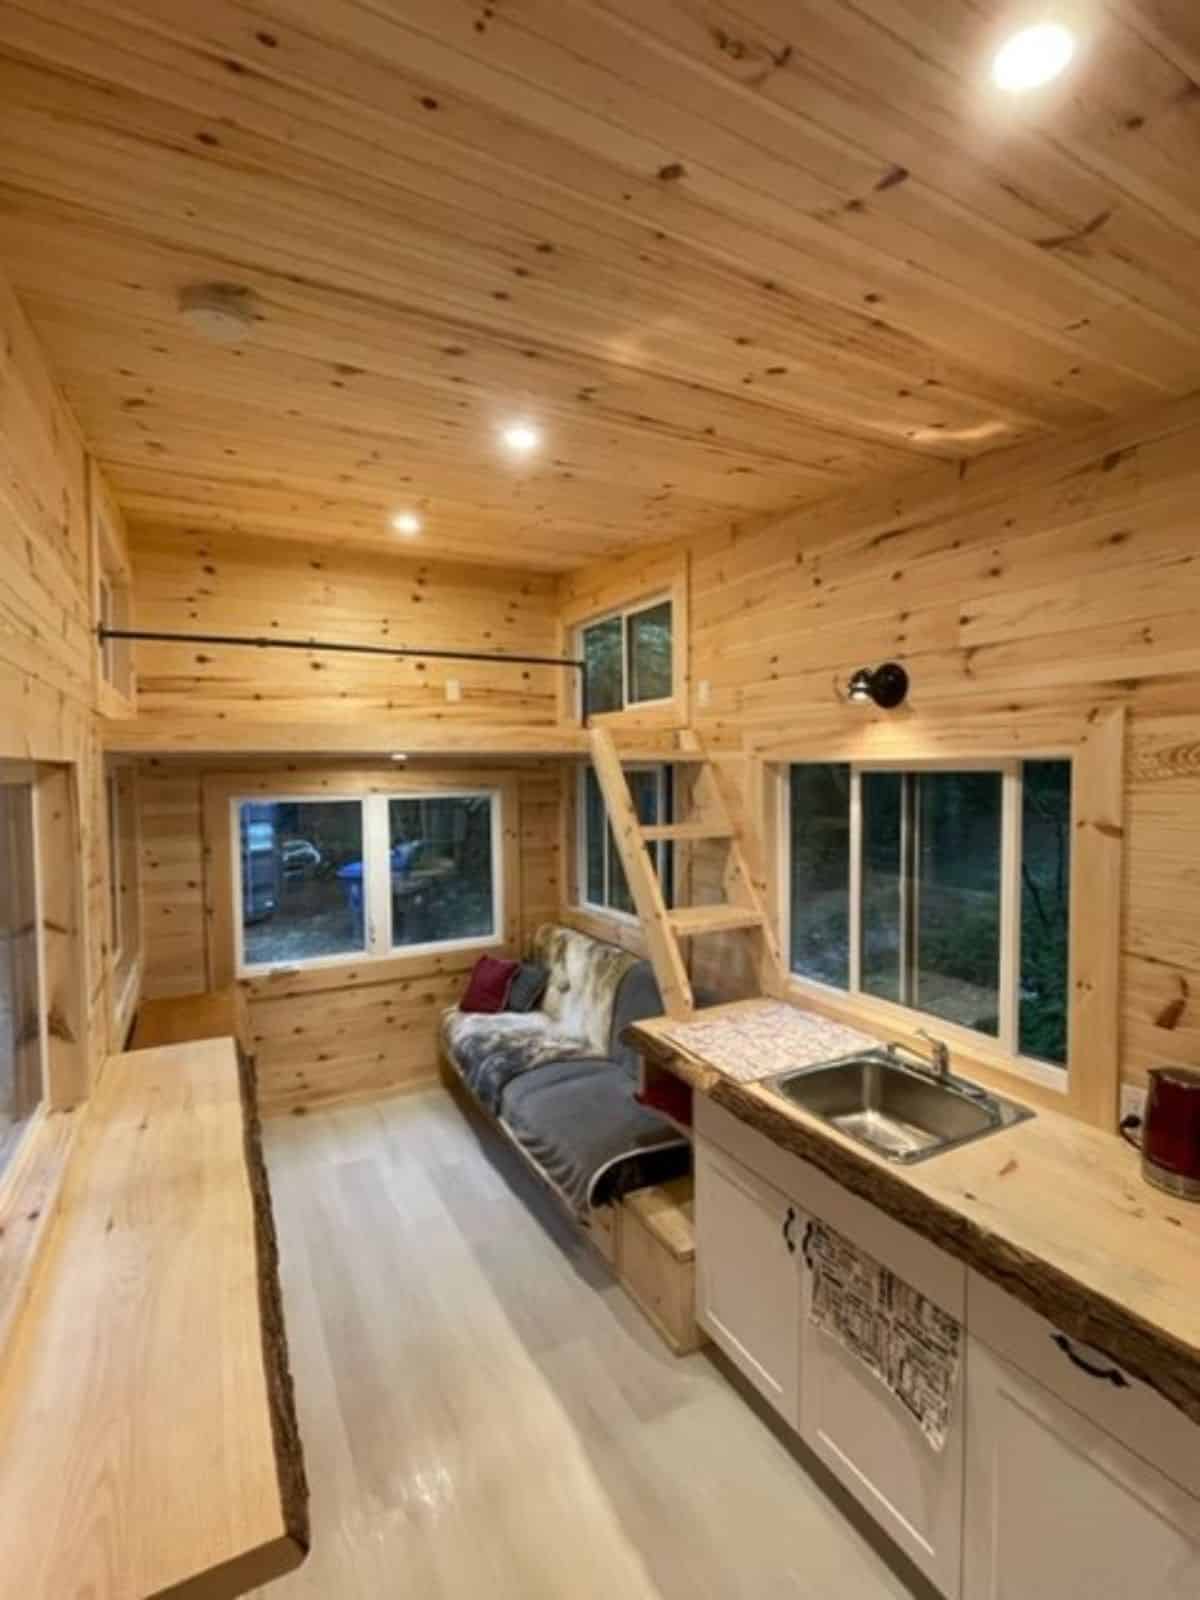 Kitchen area of This Elegant Tiny Home